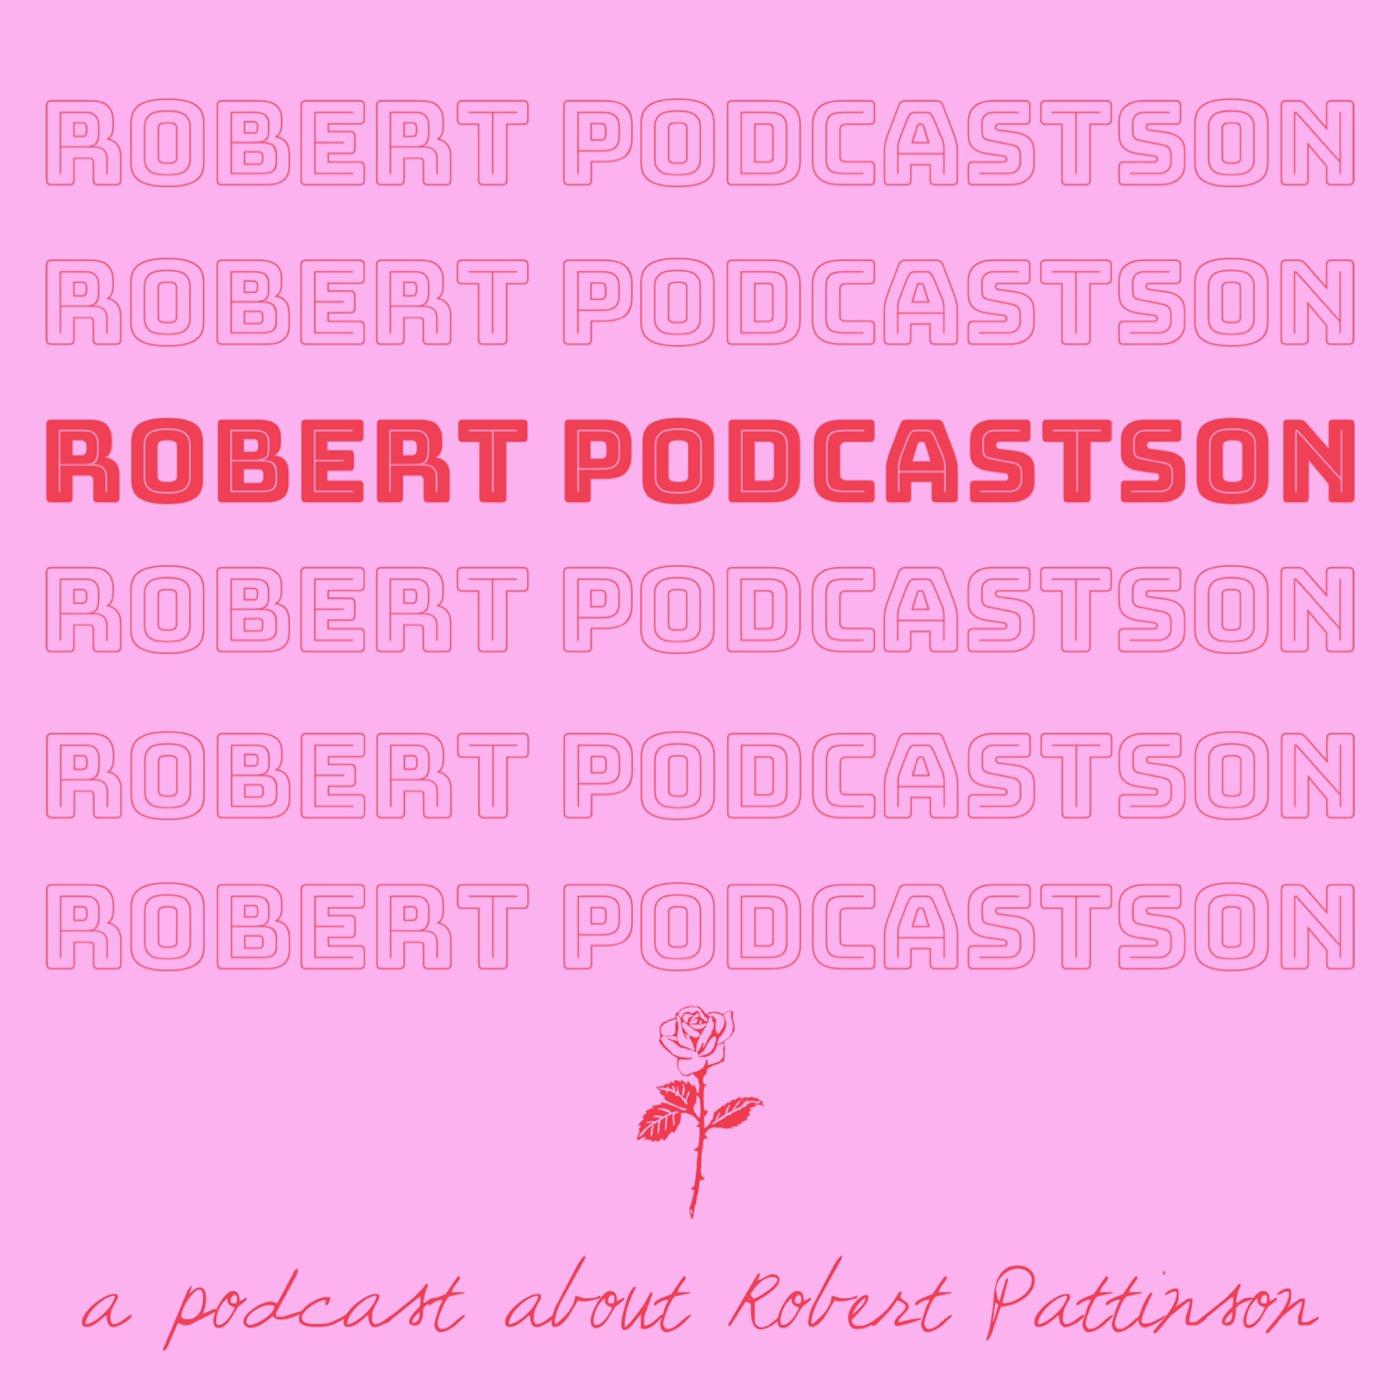 Robert Podcastson